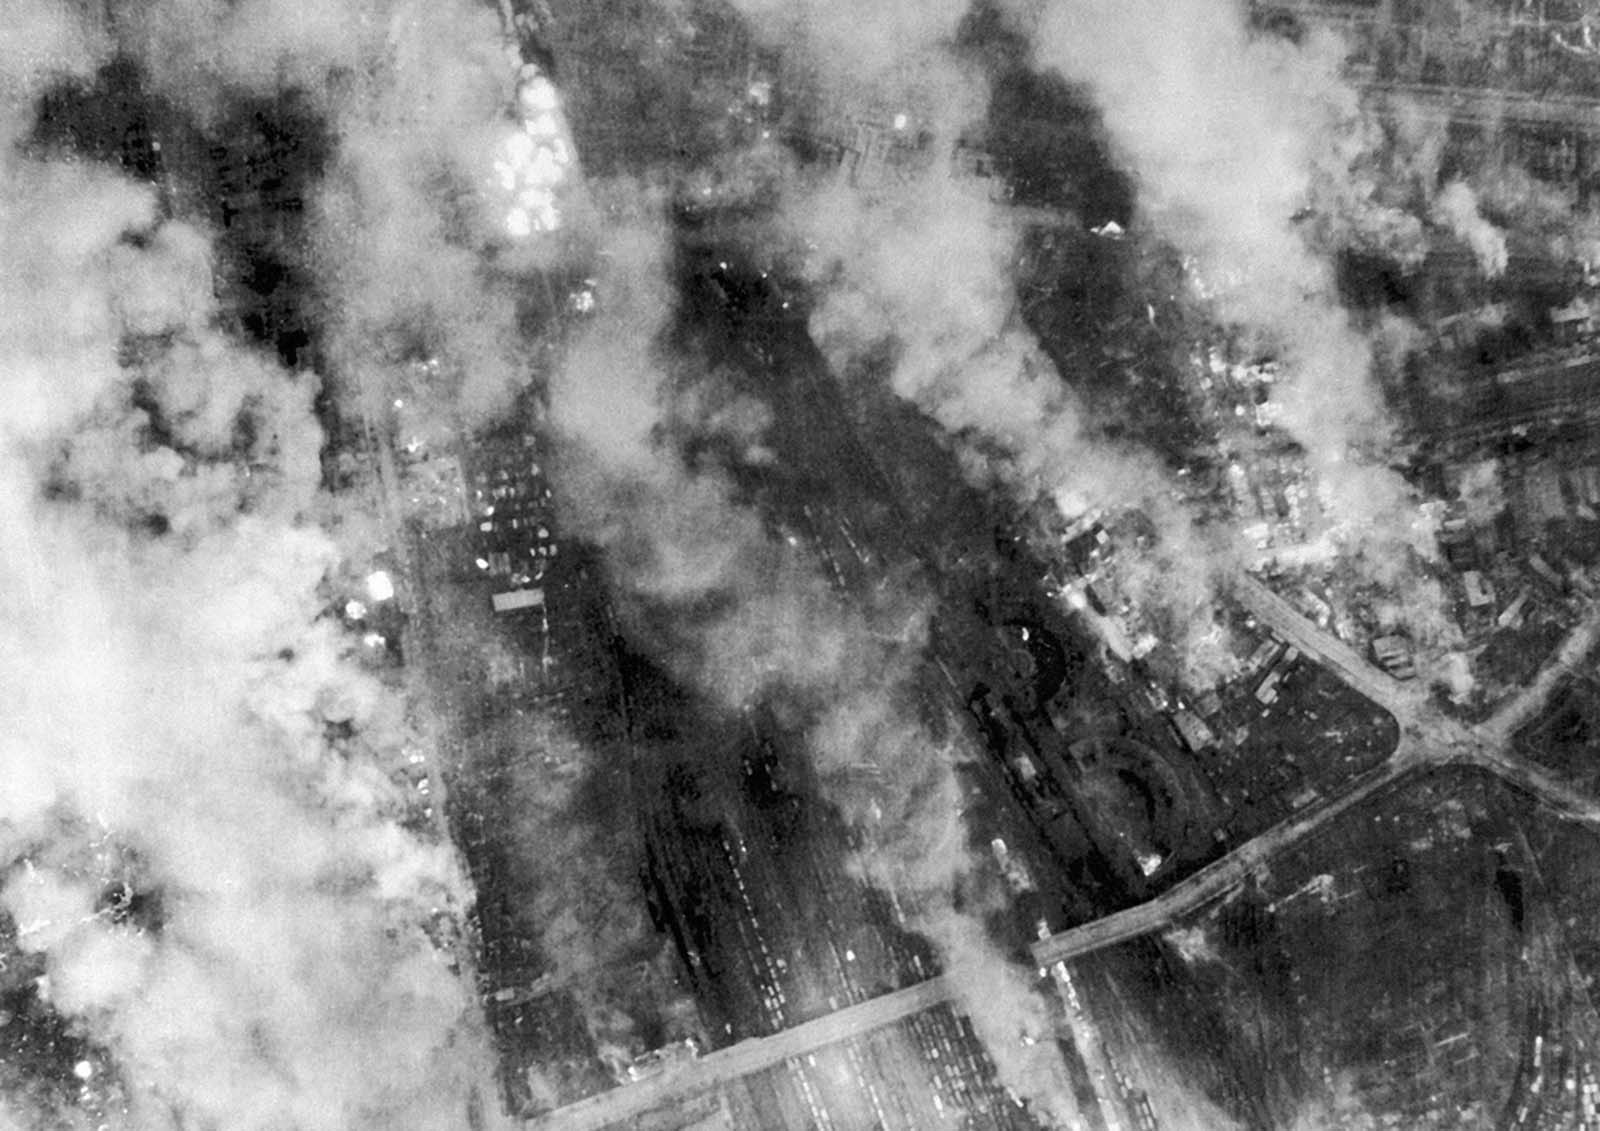 The smoke from fires still burning drifted across Dresden on February 14, 1945.